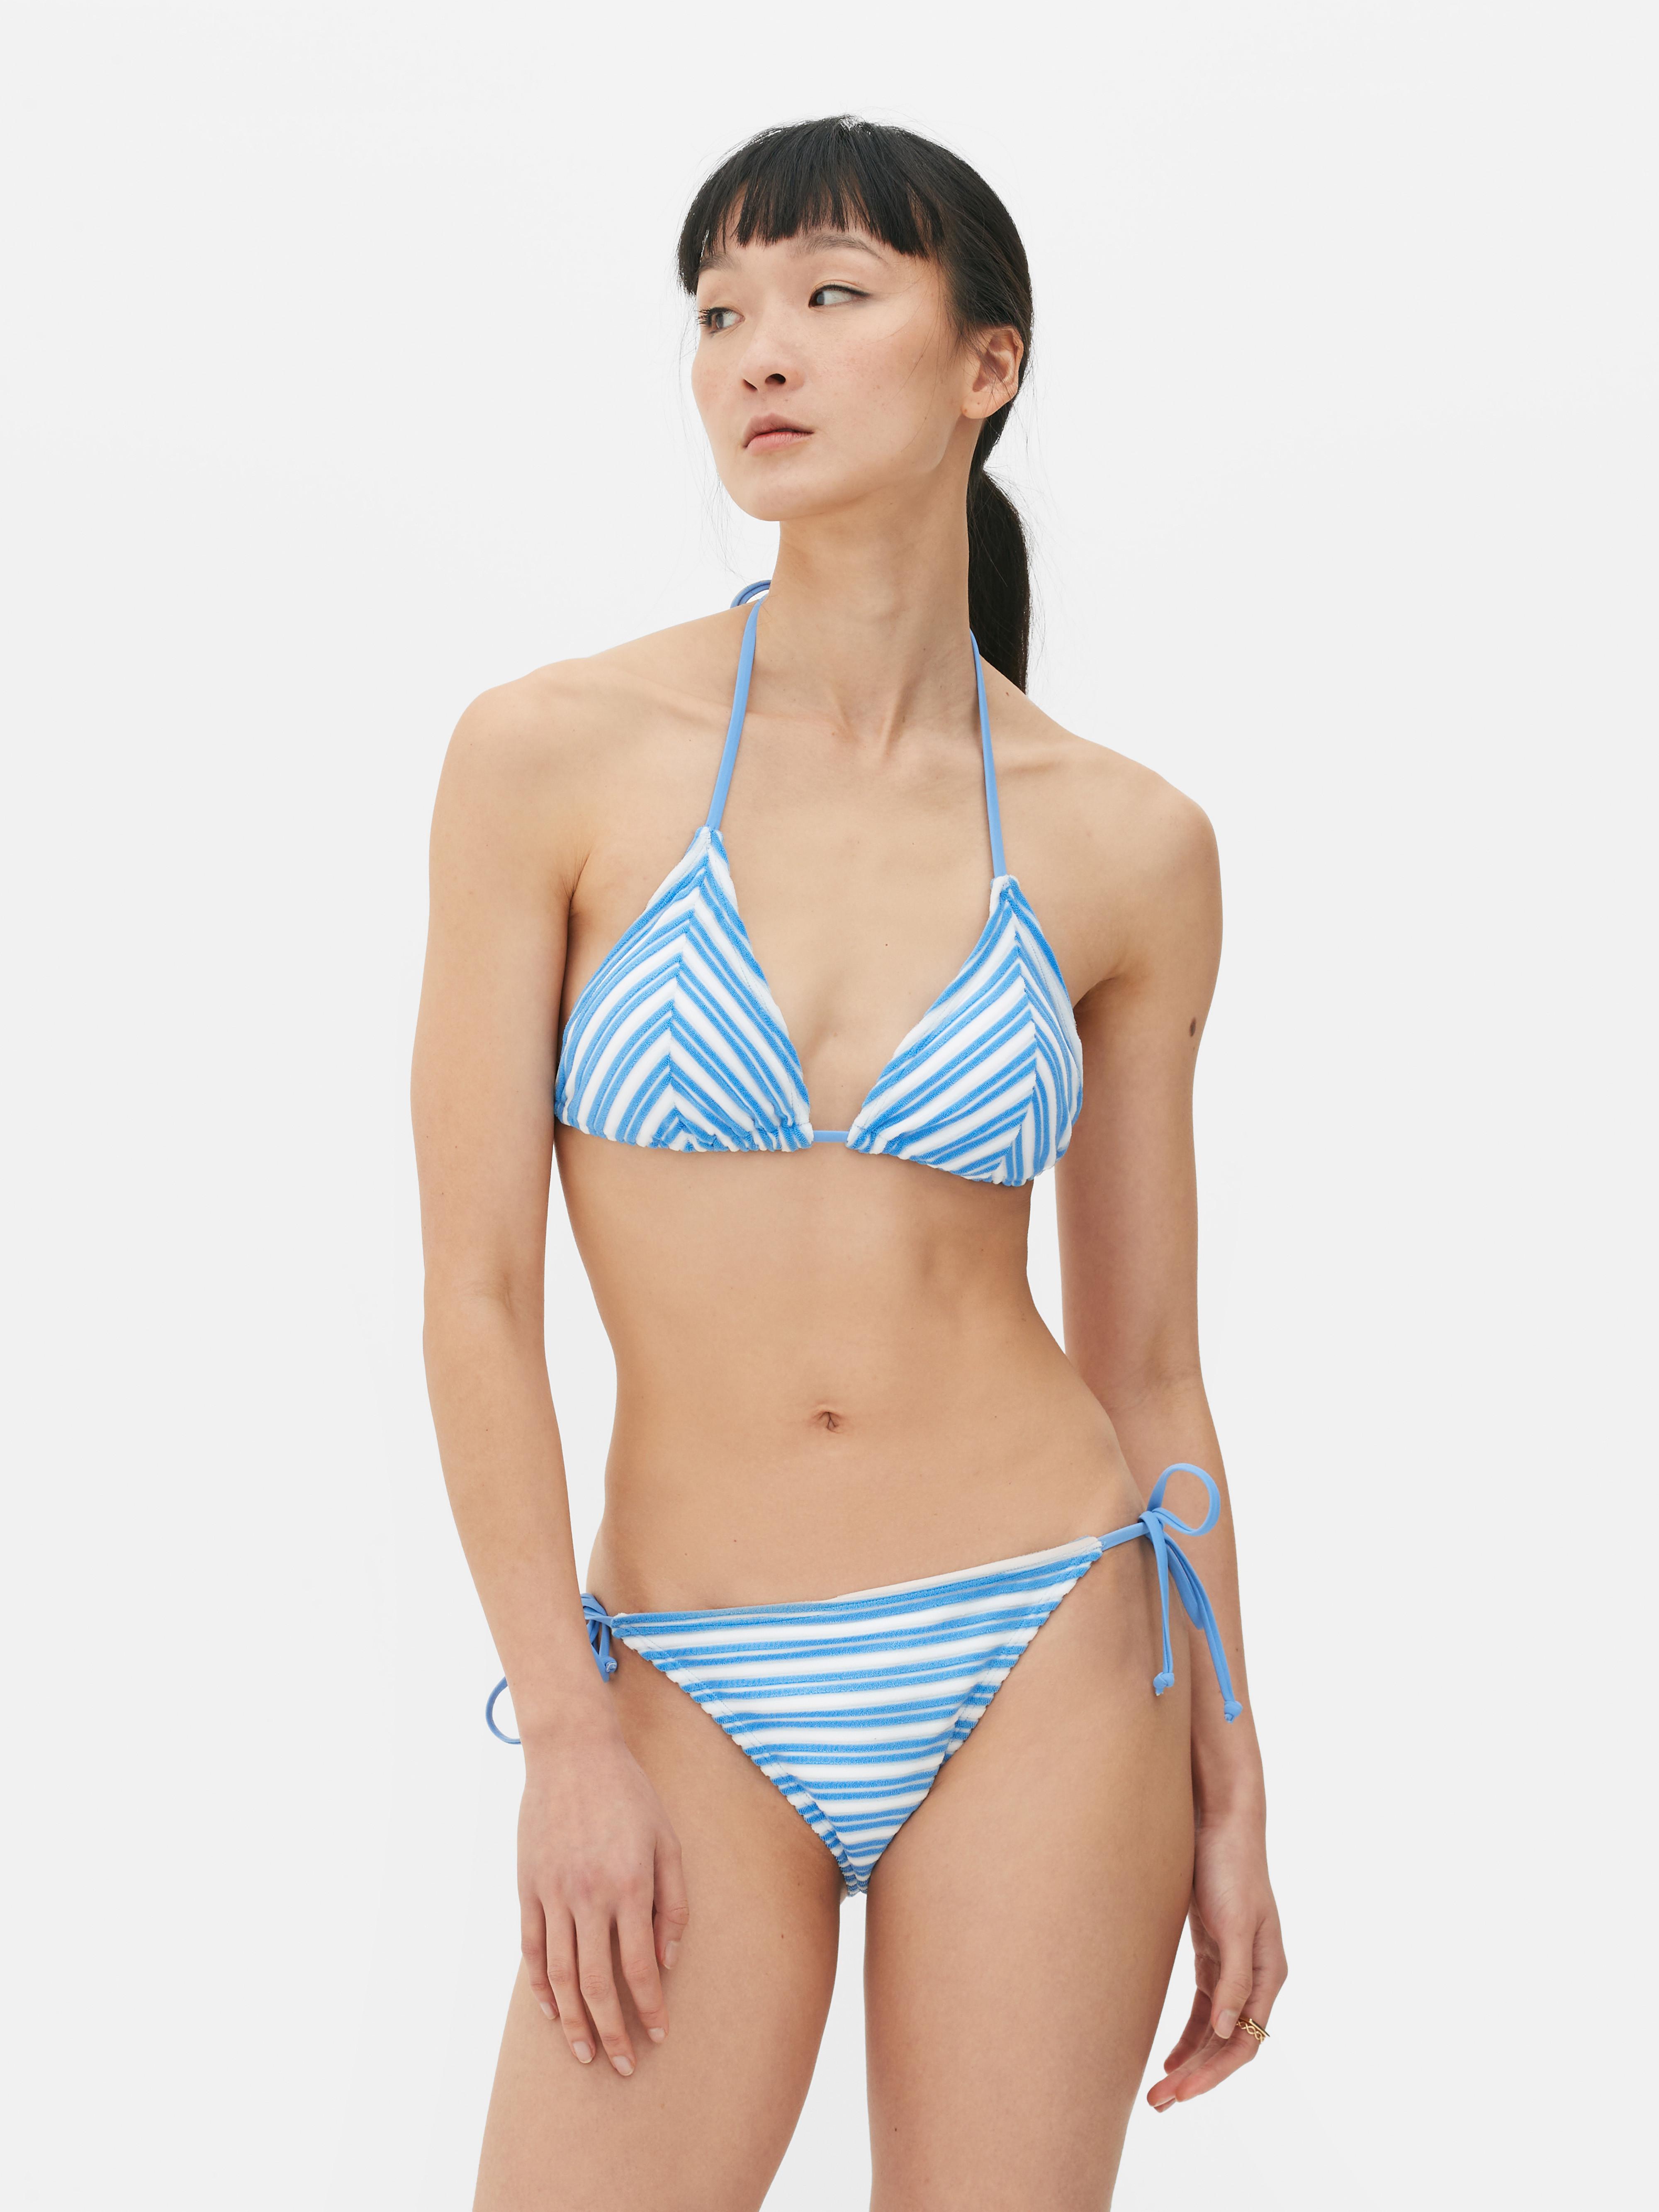 Primark ocean club navy style black and white stripe tube top push up  bikini bikini